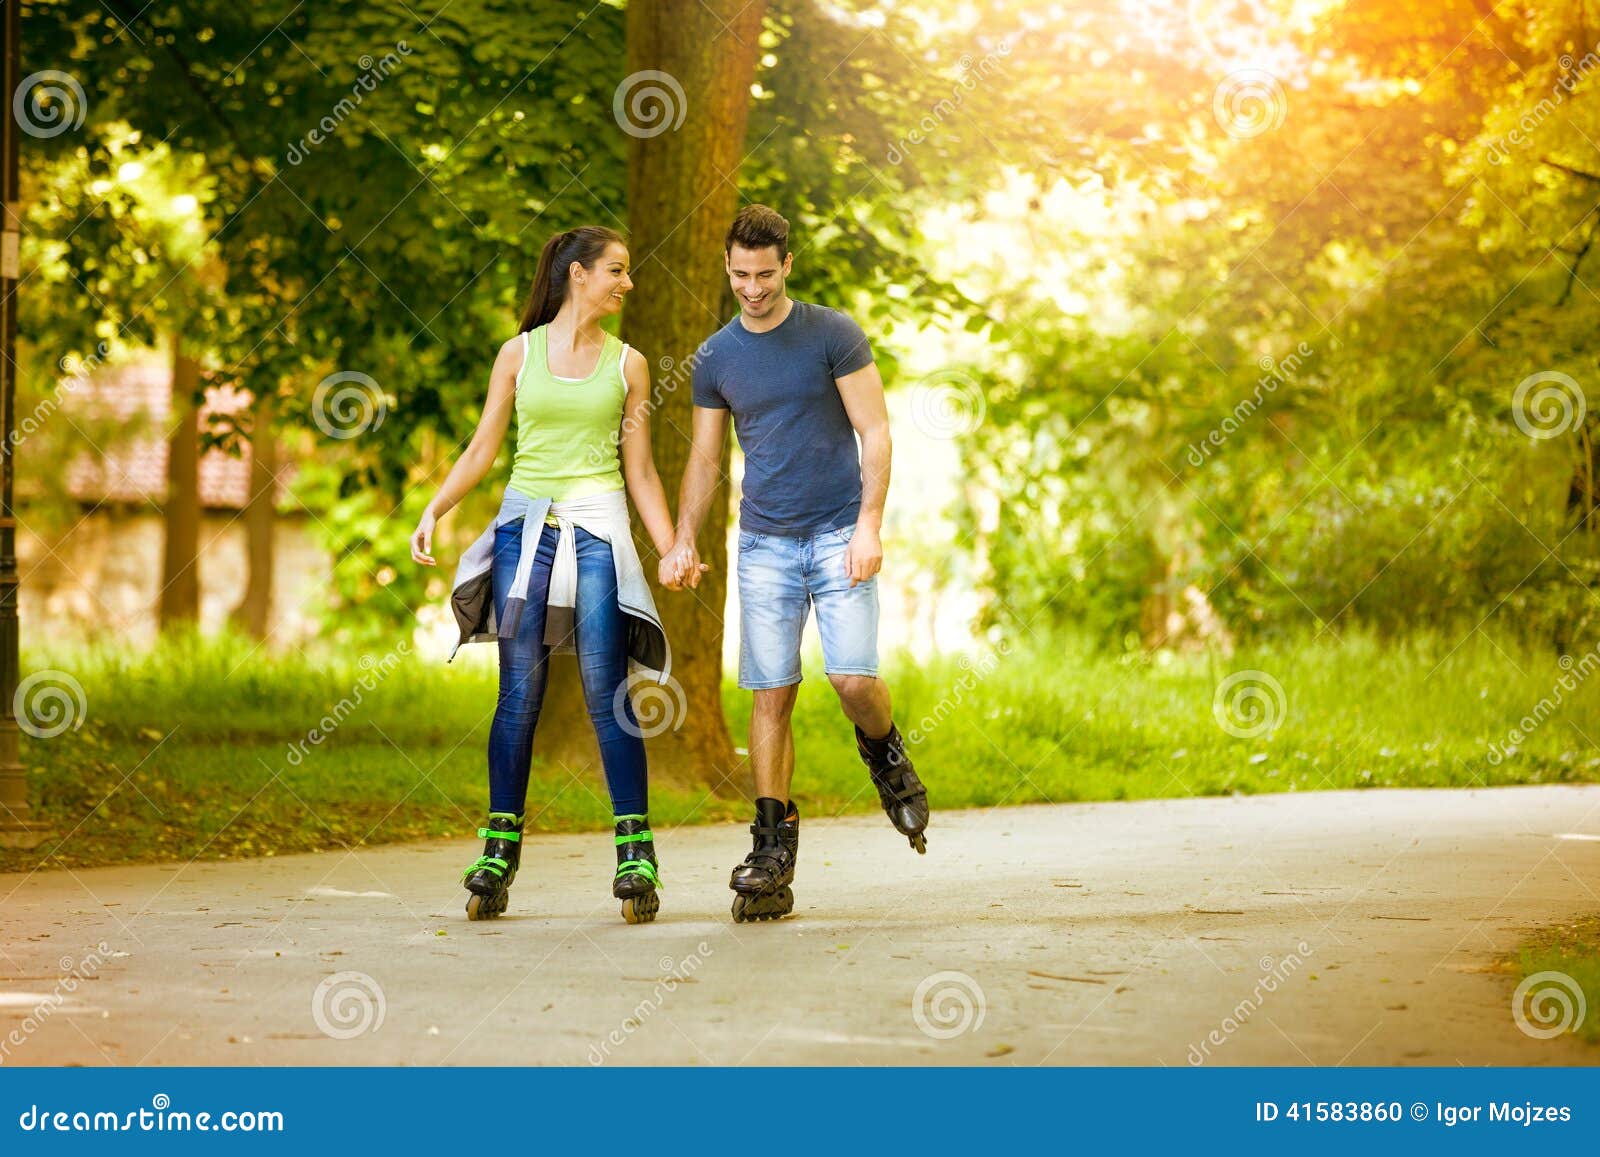 affectionate couple having leisure recreation